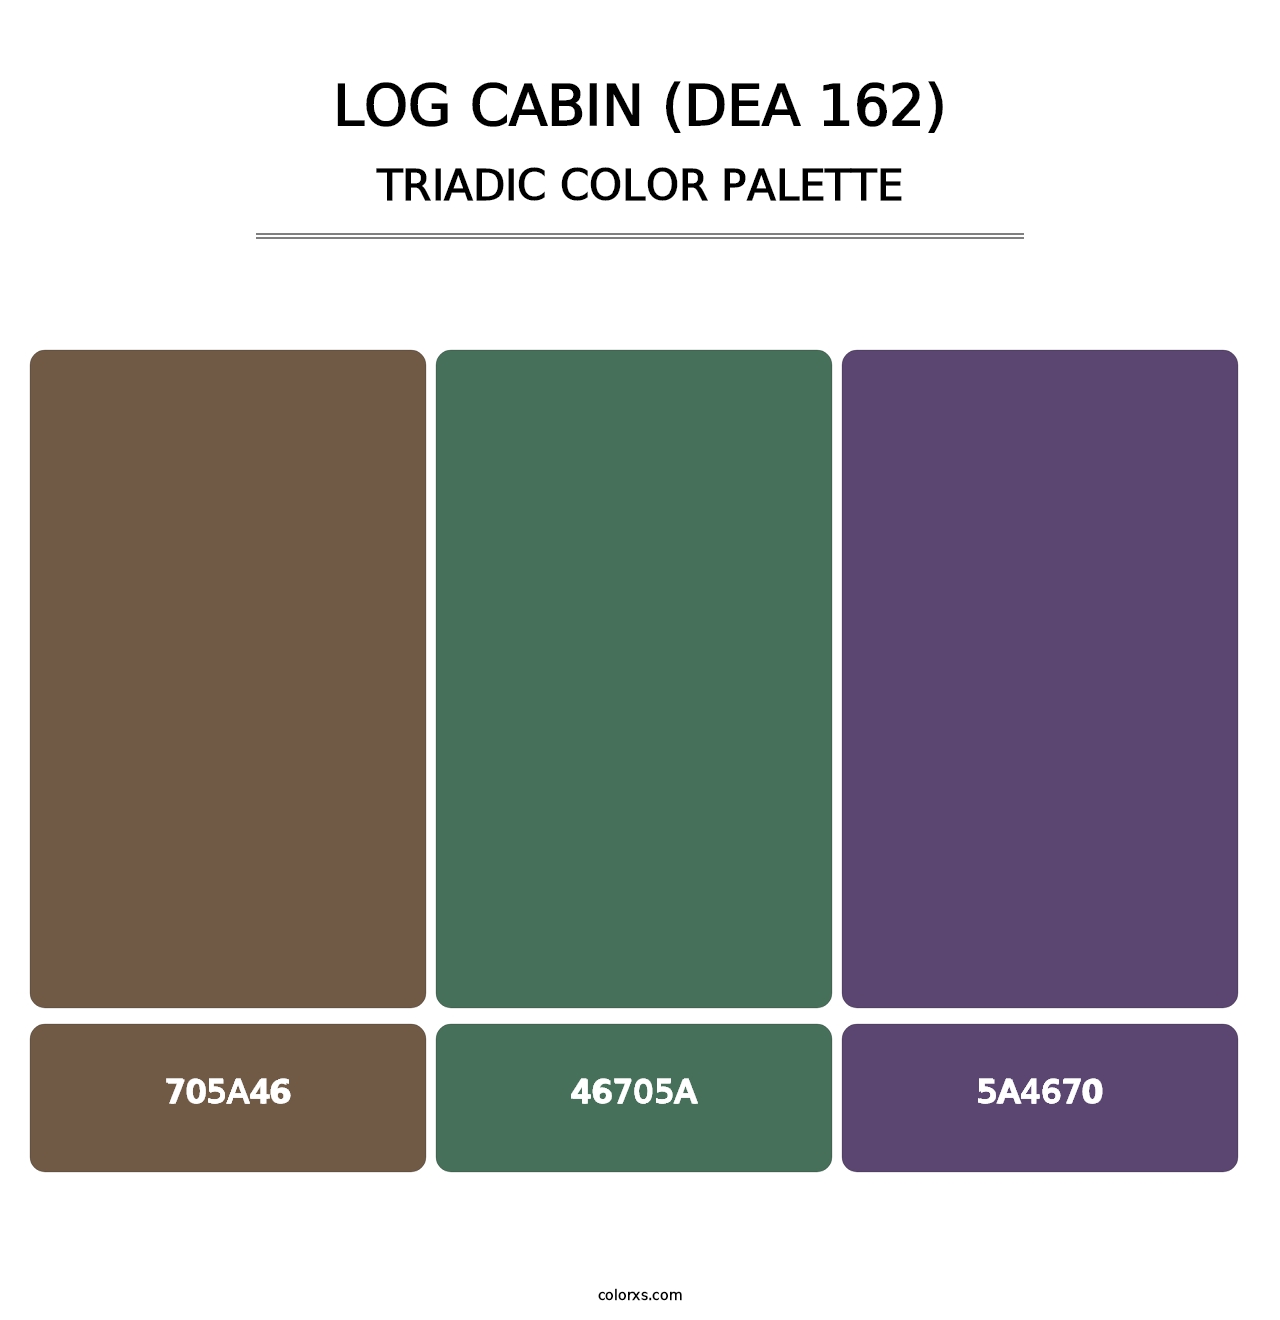 Log Cabin (DEA 162) - Triadic Color Palette